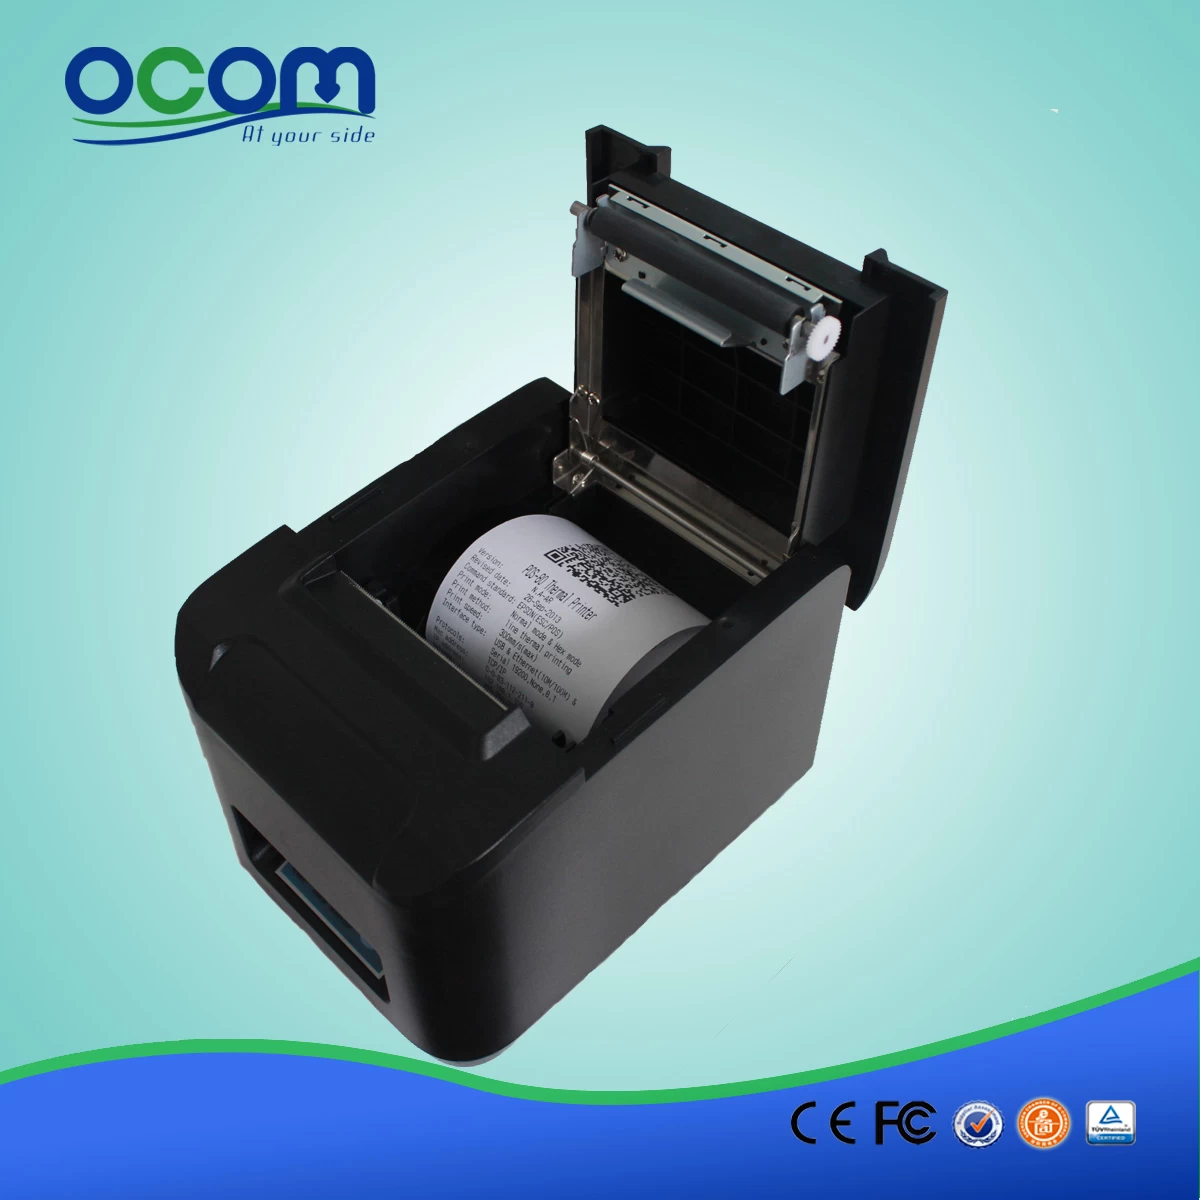 Auto cutter USB POS 80 mobile thermal receipt pos printer